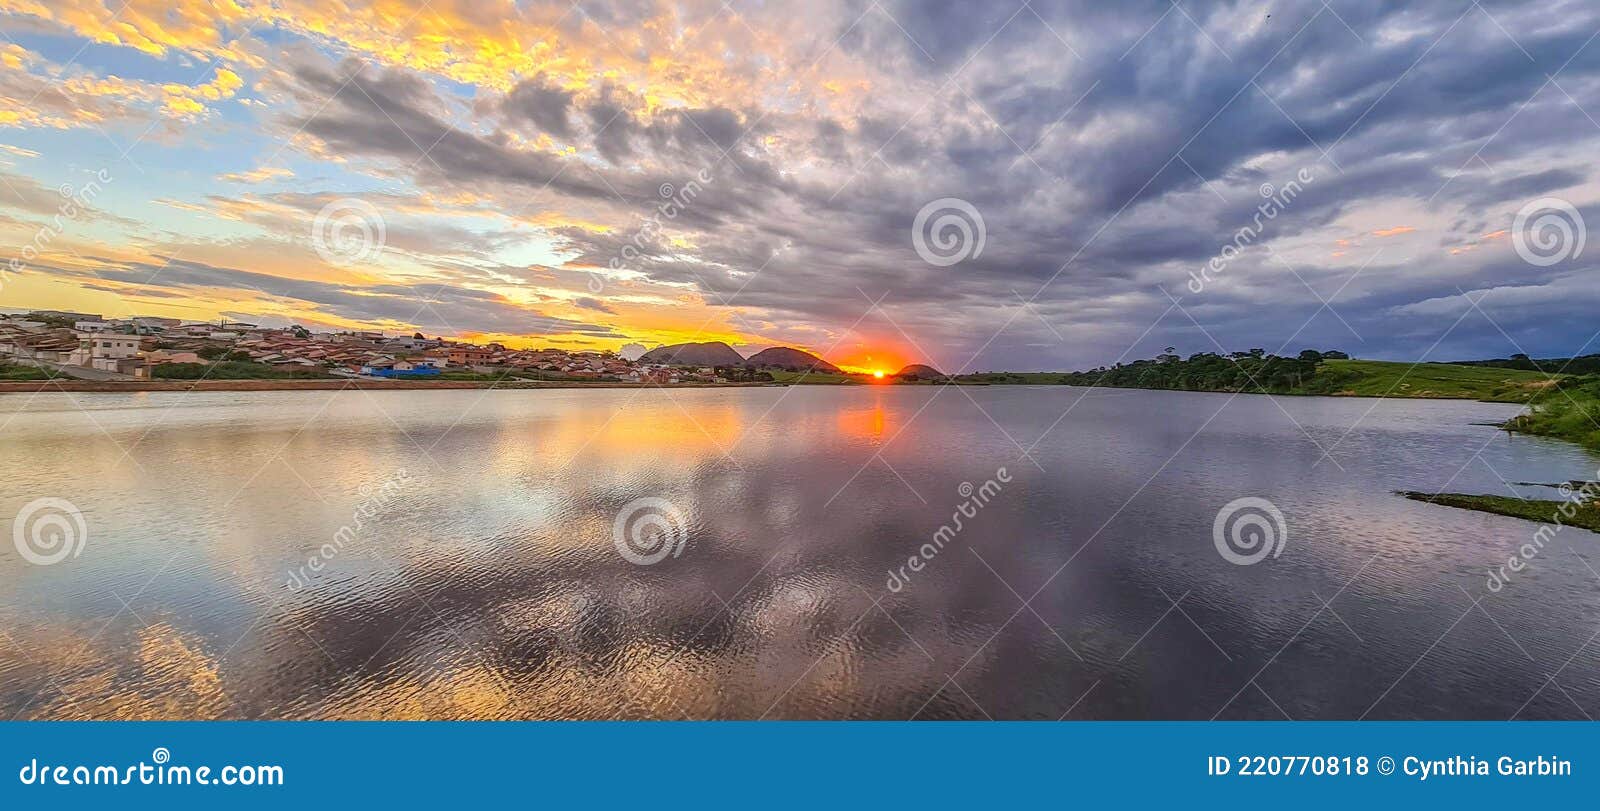 sunset in brazilian lake